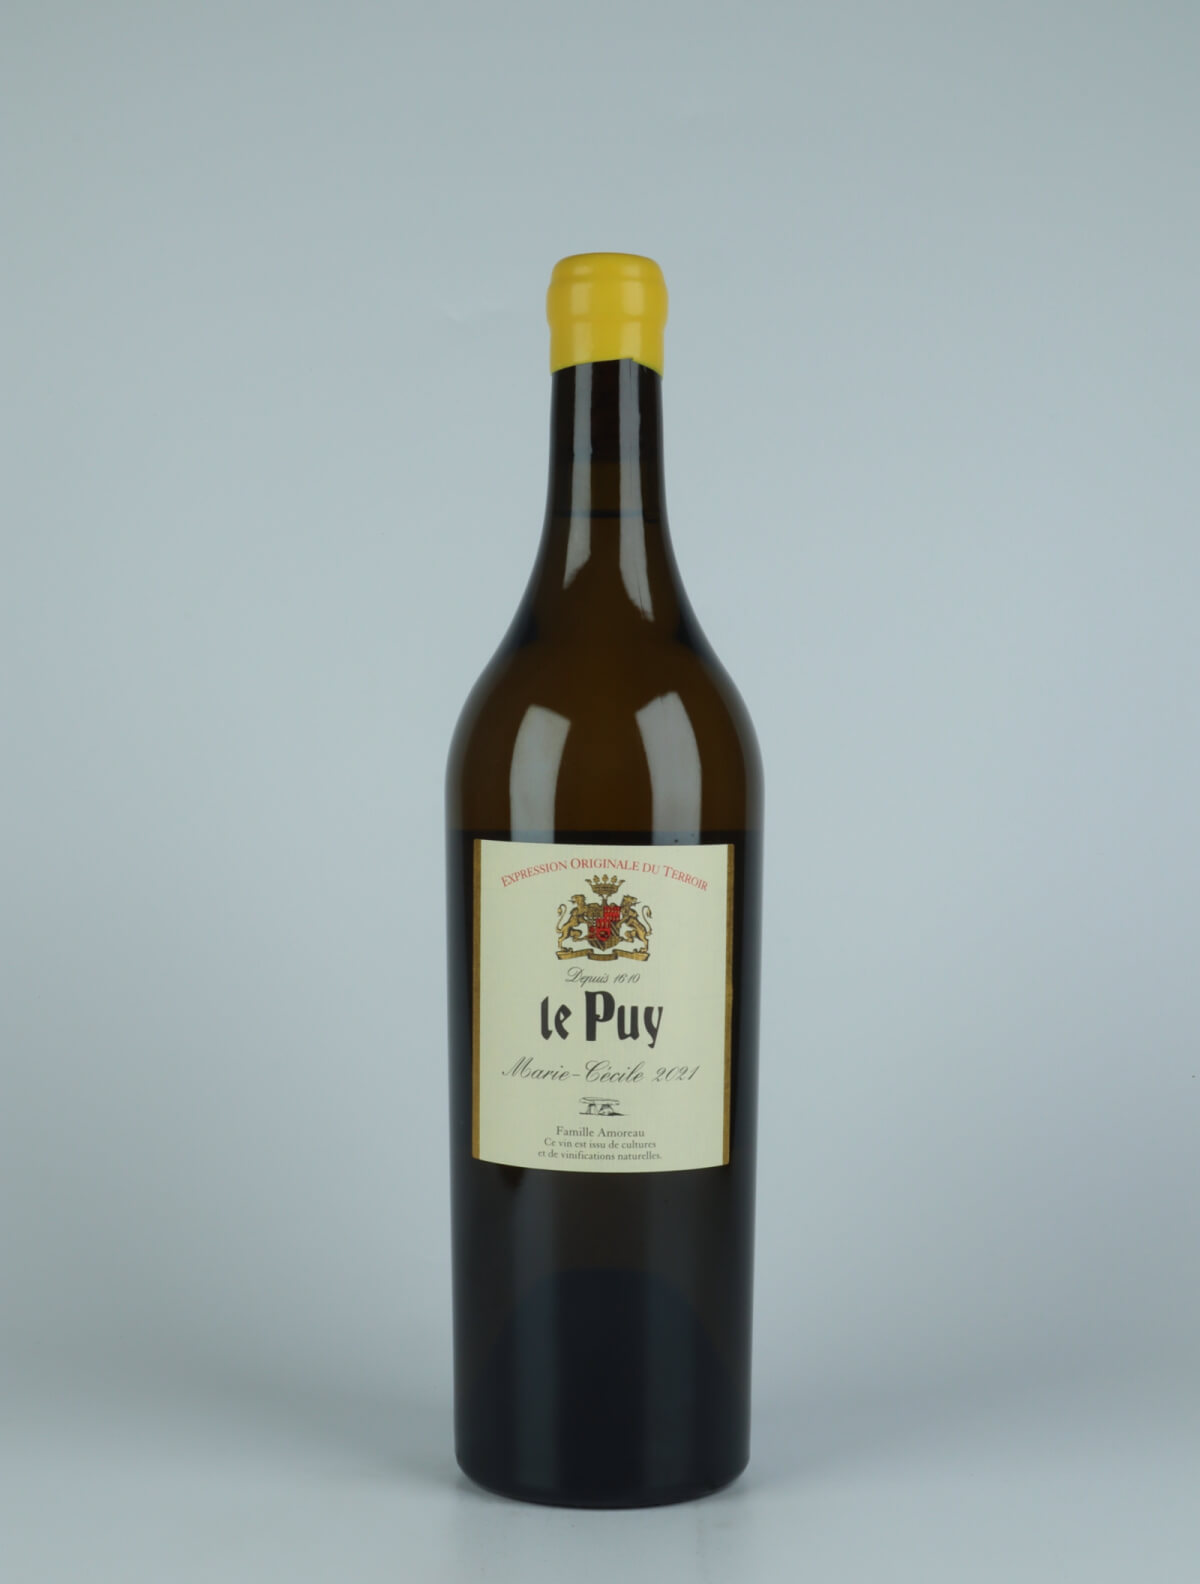 A bottle 2021 Marie-Cécile White wine from Château le Puy, Bordeaux in France